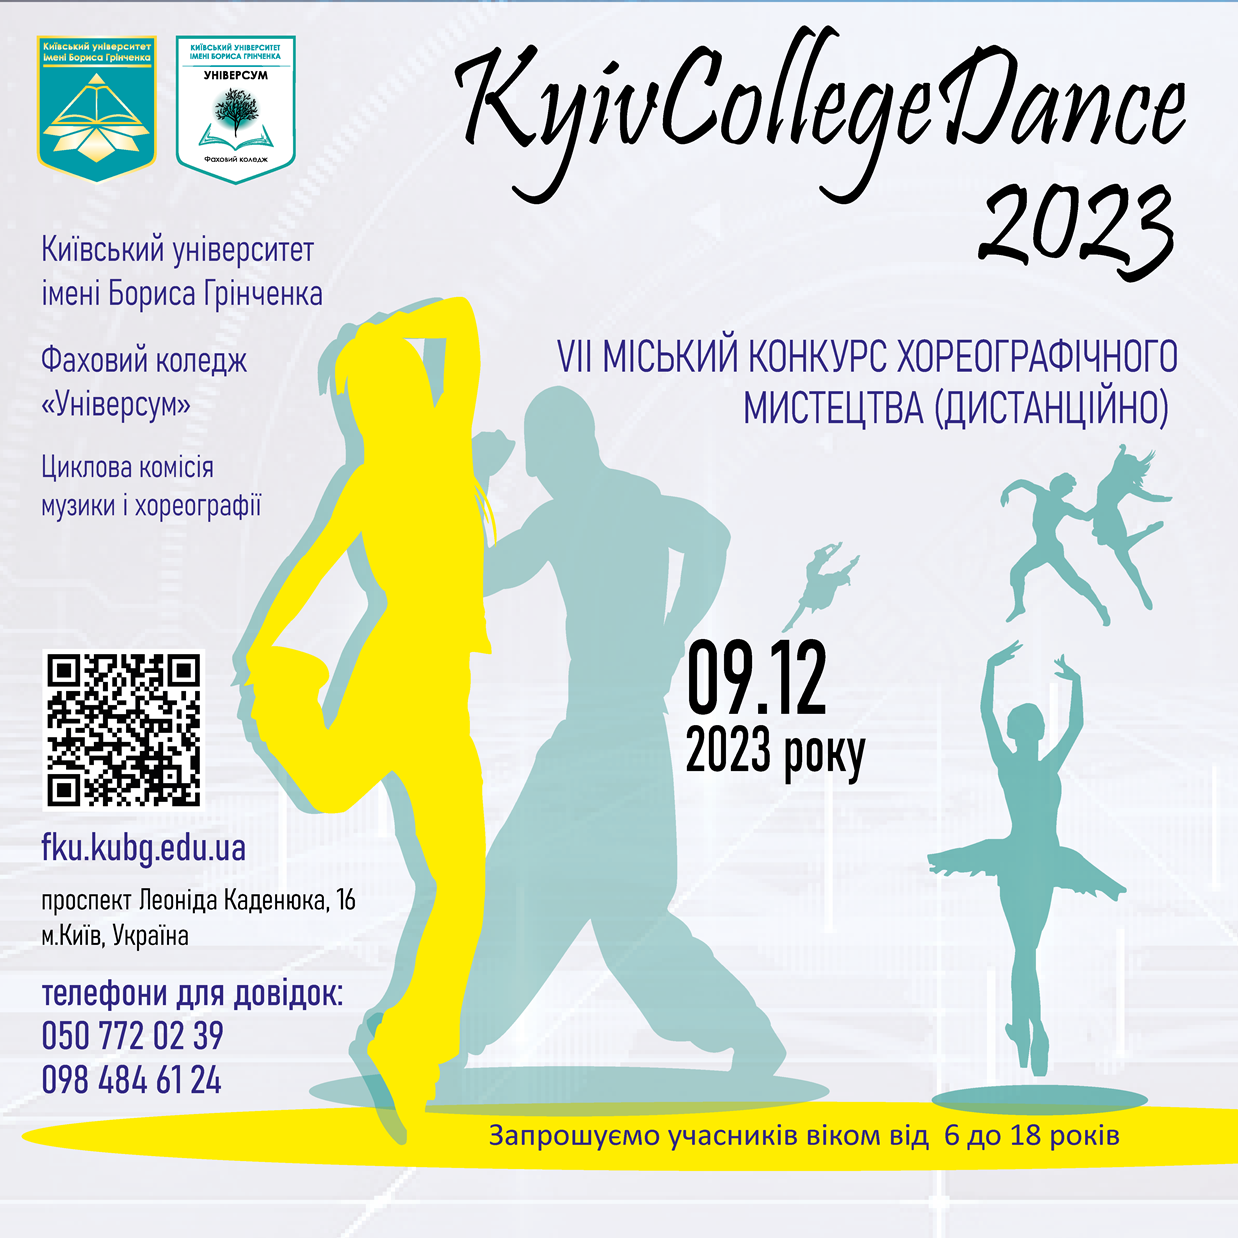 Kyiv College Dance 2023